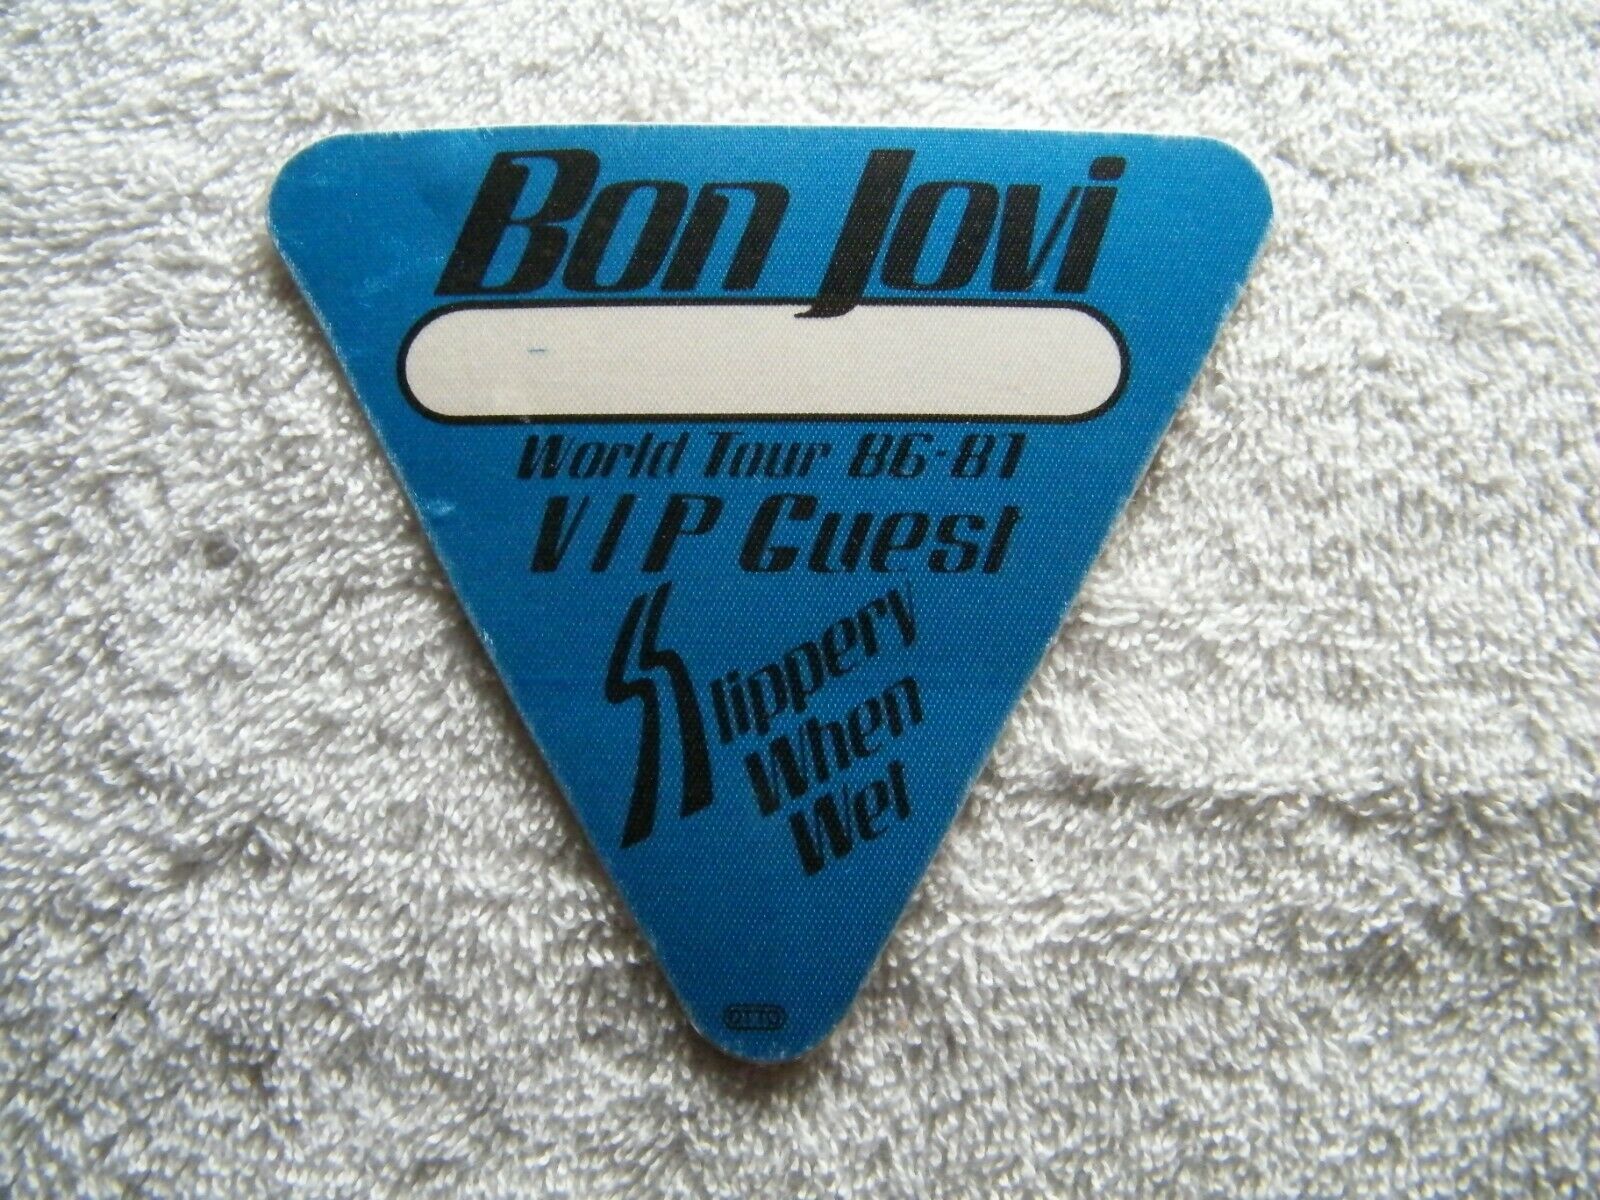 Bon Jovi - Vip Guest Backstage Pass - World Tour 86-87 Slippery When Wet Tour